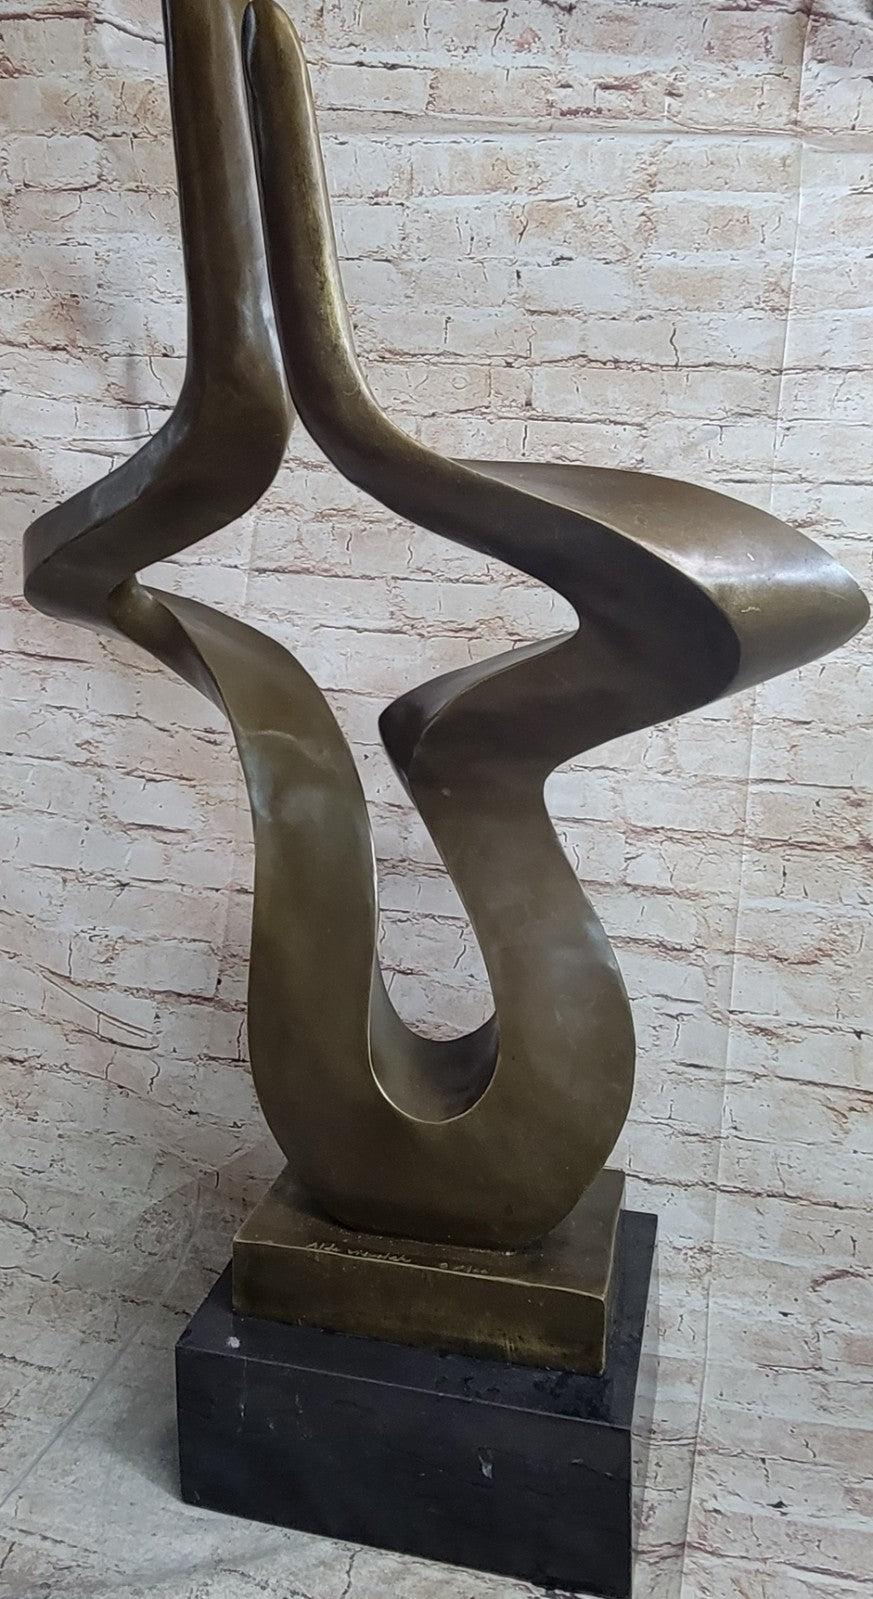 100% Solid Bronze Surrealistic Chic Design Home Office Decoration Figurine Figure